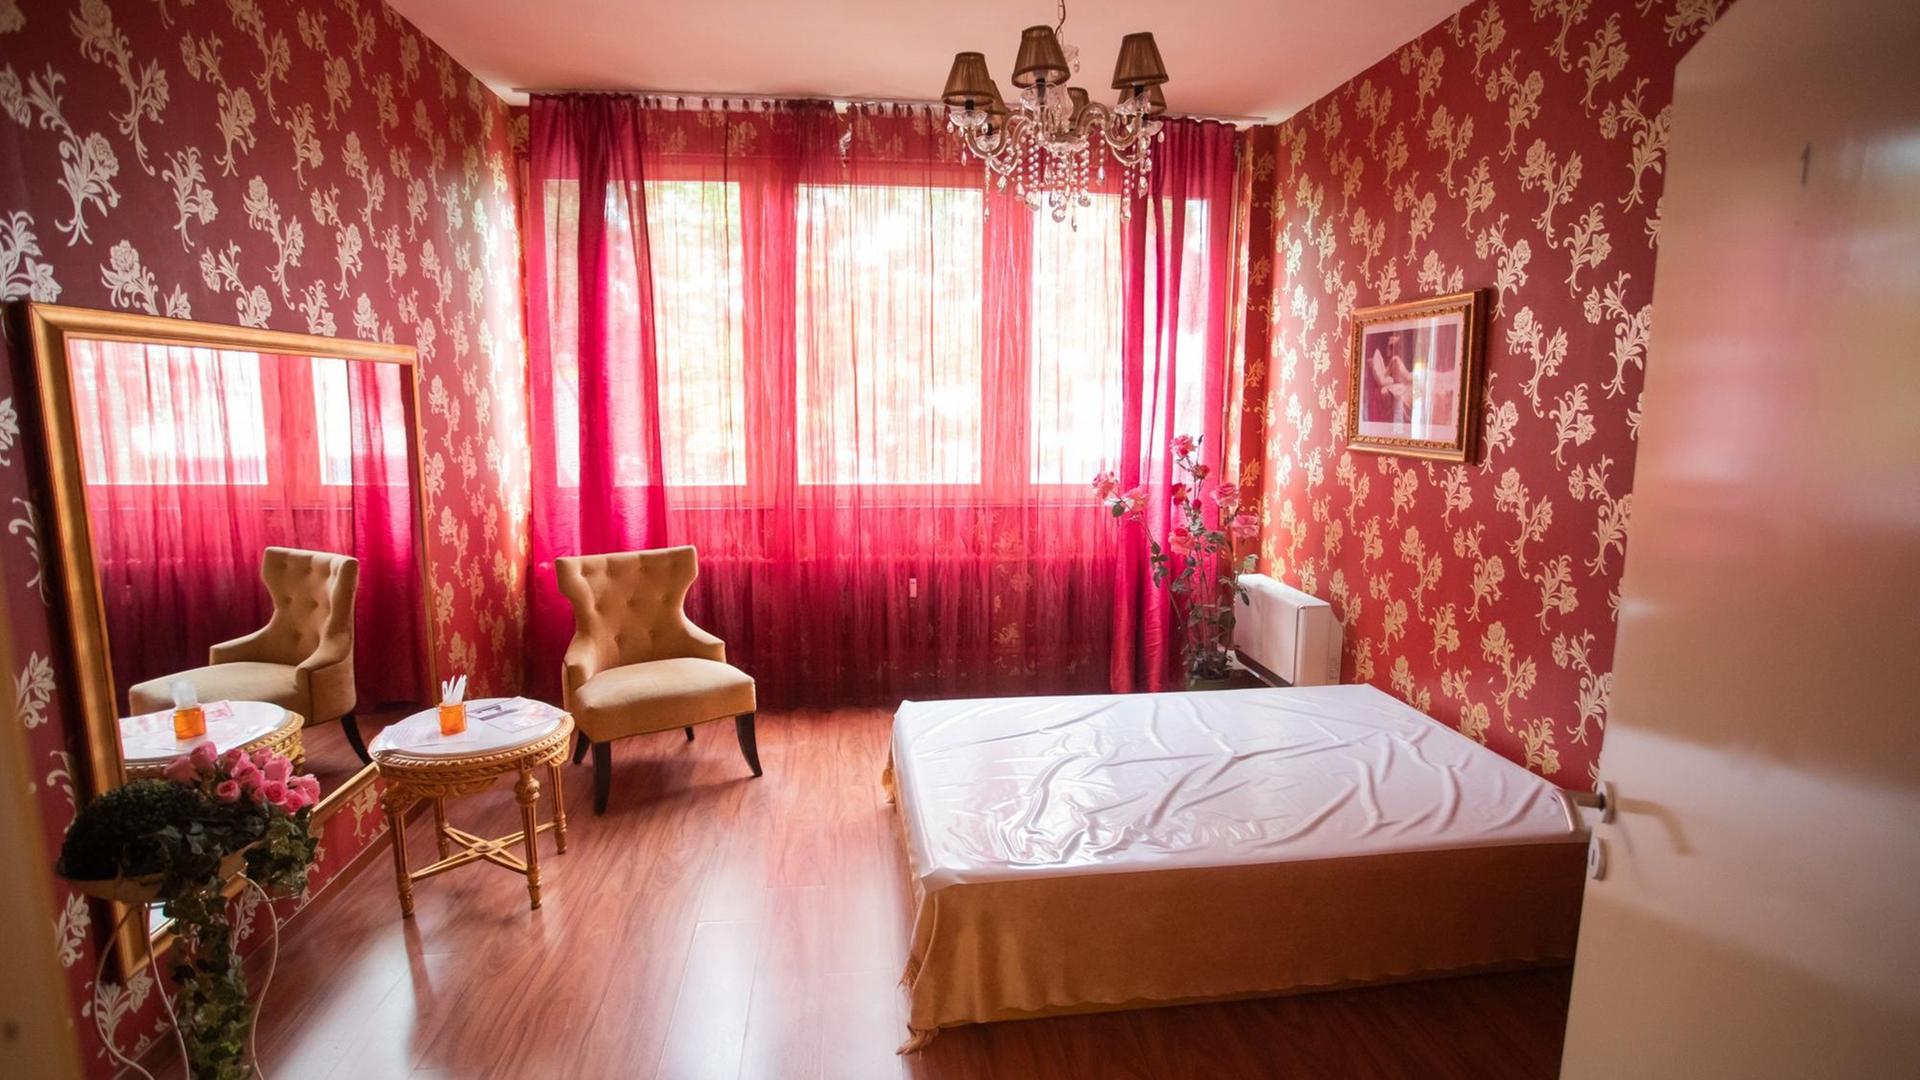 Blick in ein leeres, rosafarbenes Bordellzimmer mit geschlossenen Gardinen 